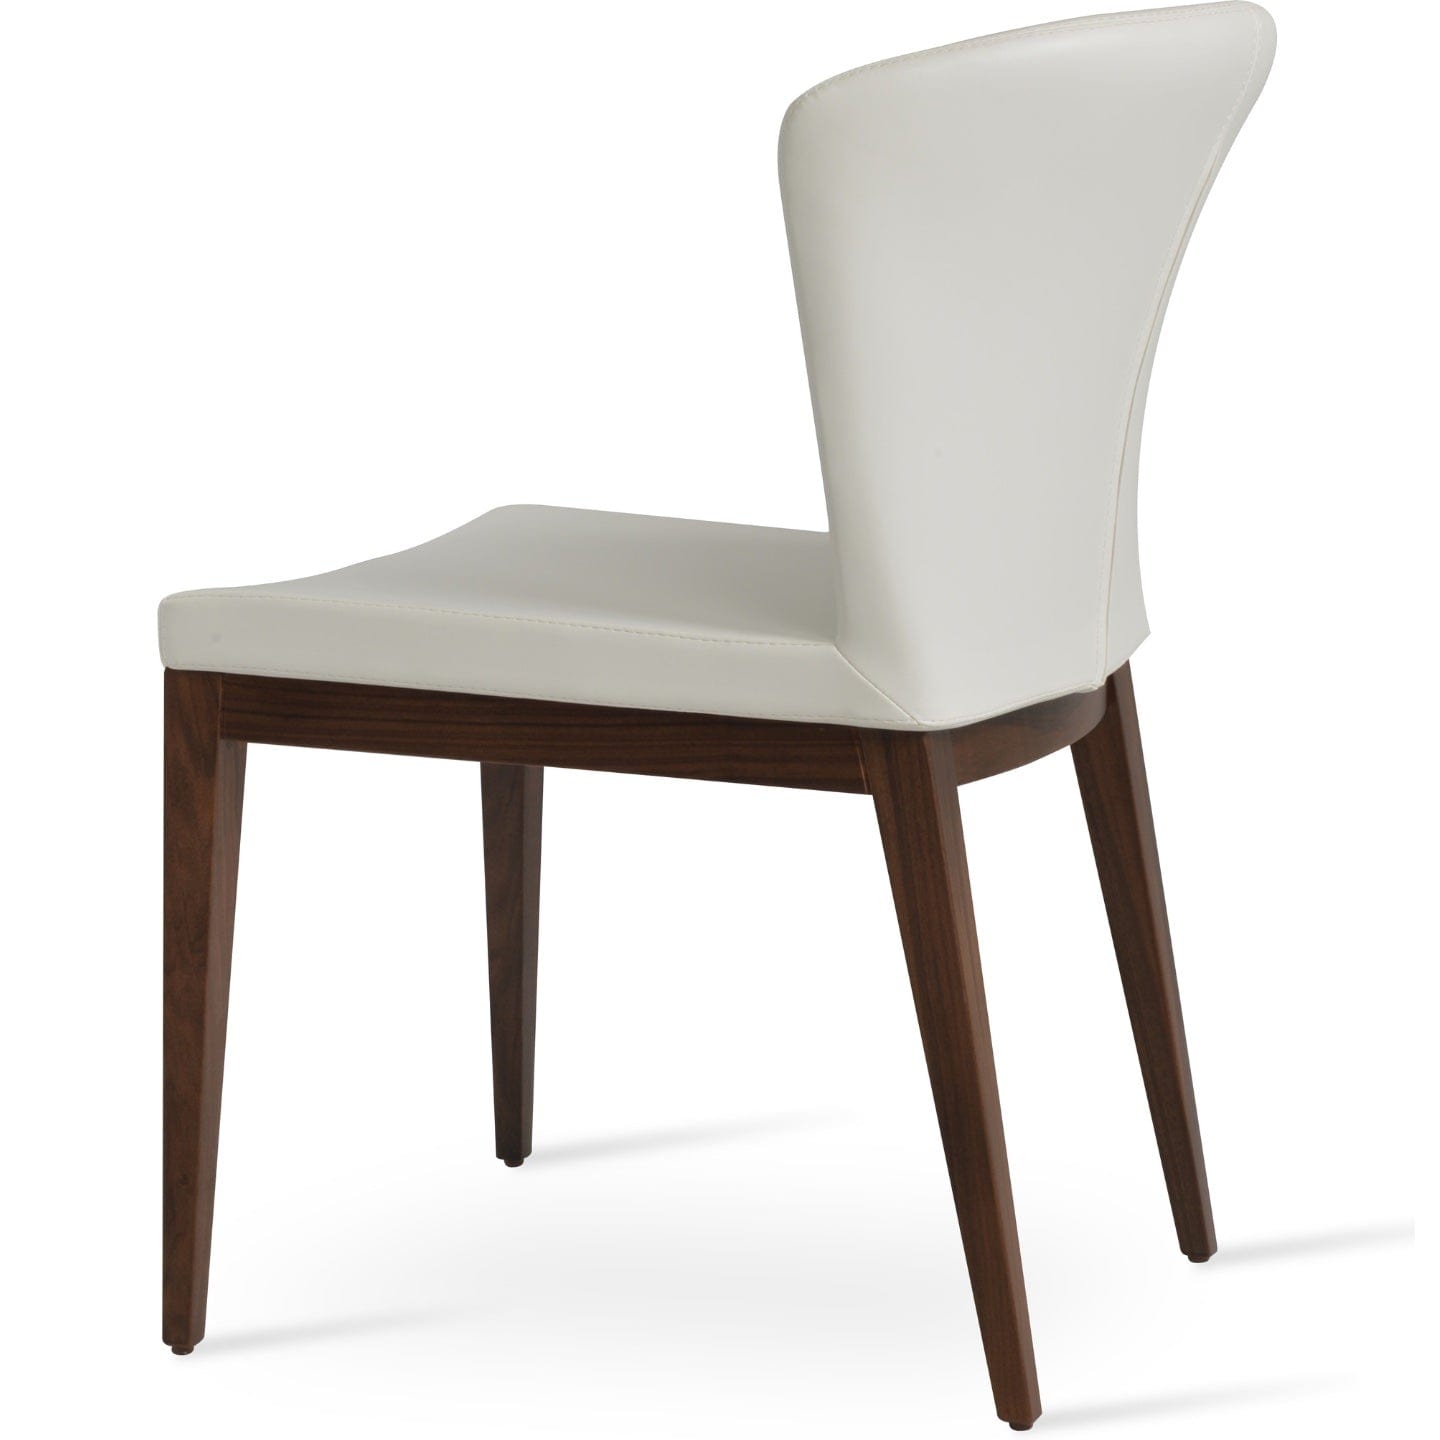 sohoConcept Kitchen & Dining Room Chairs Capri Wood Chairs | White Leather Wooden Dining Chairs